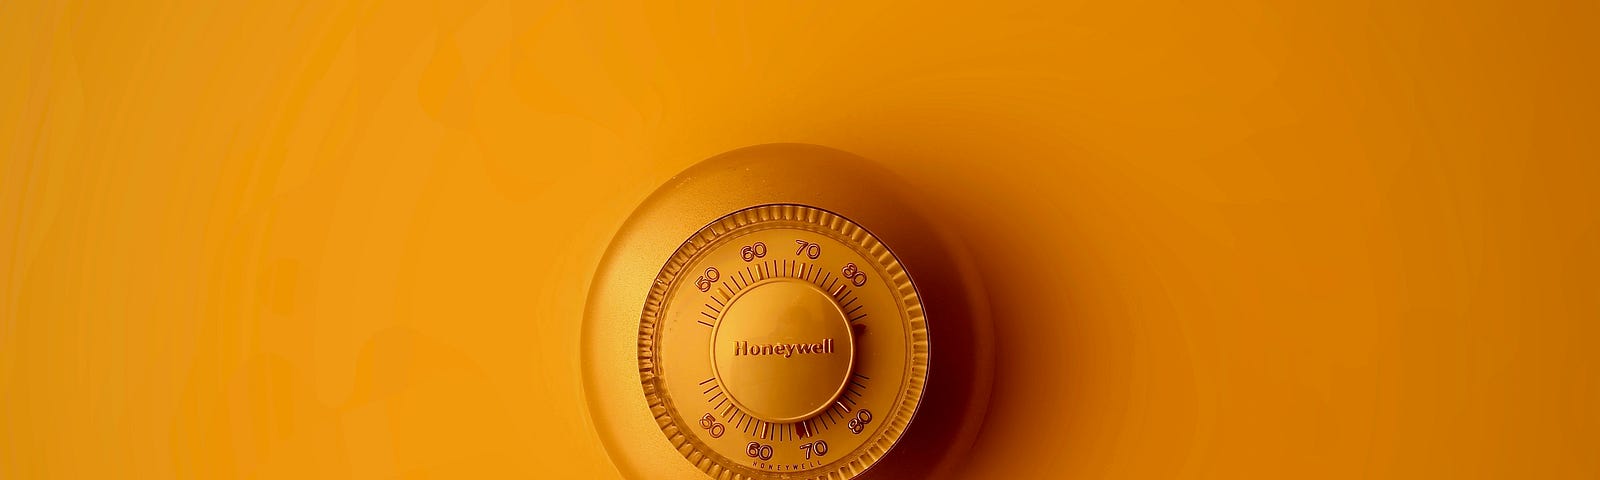 Circular wall thermostat